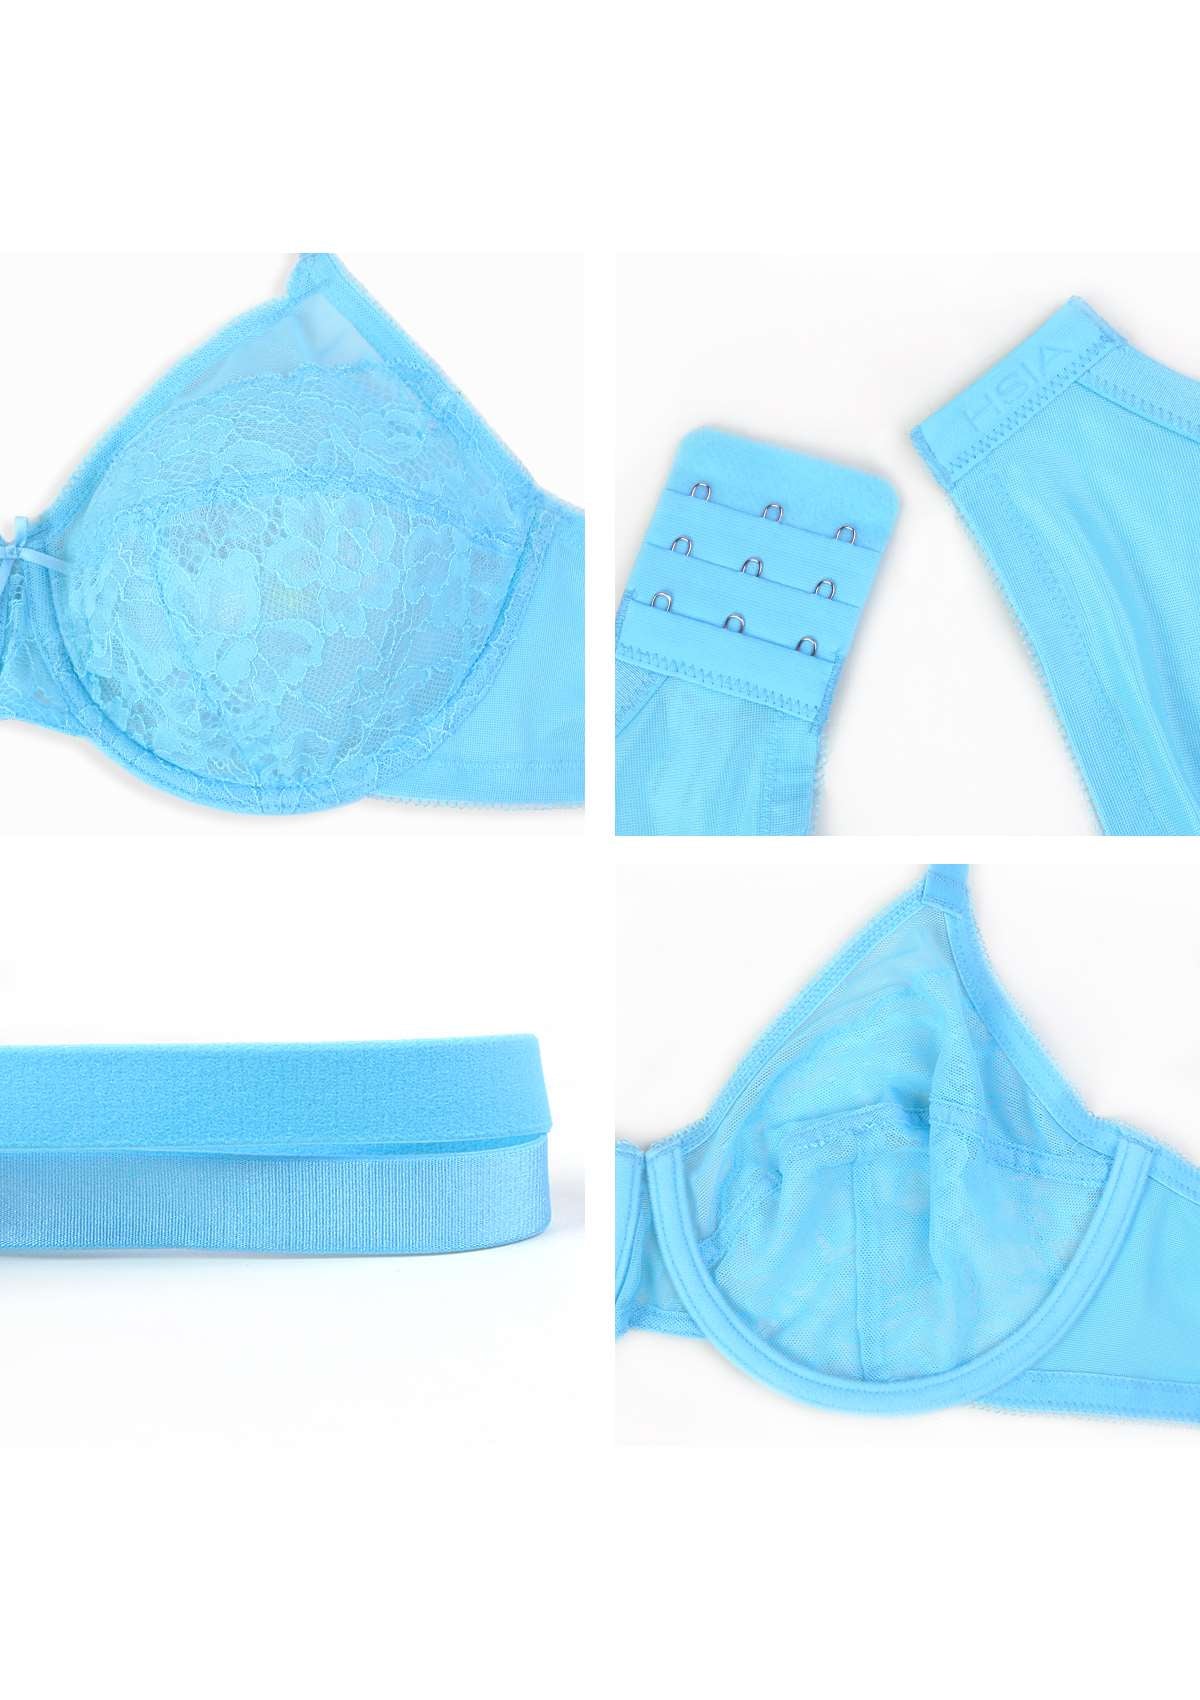 HSIA Enchante Minimizer Lace Bra: Full Support For Heavy Breasts - Capri Blue / 42 / D